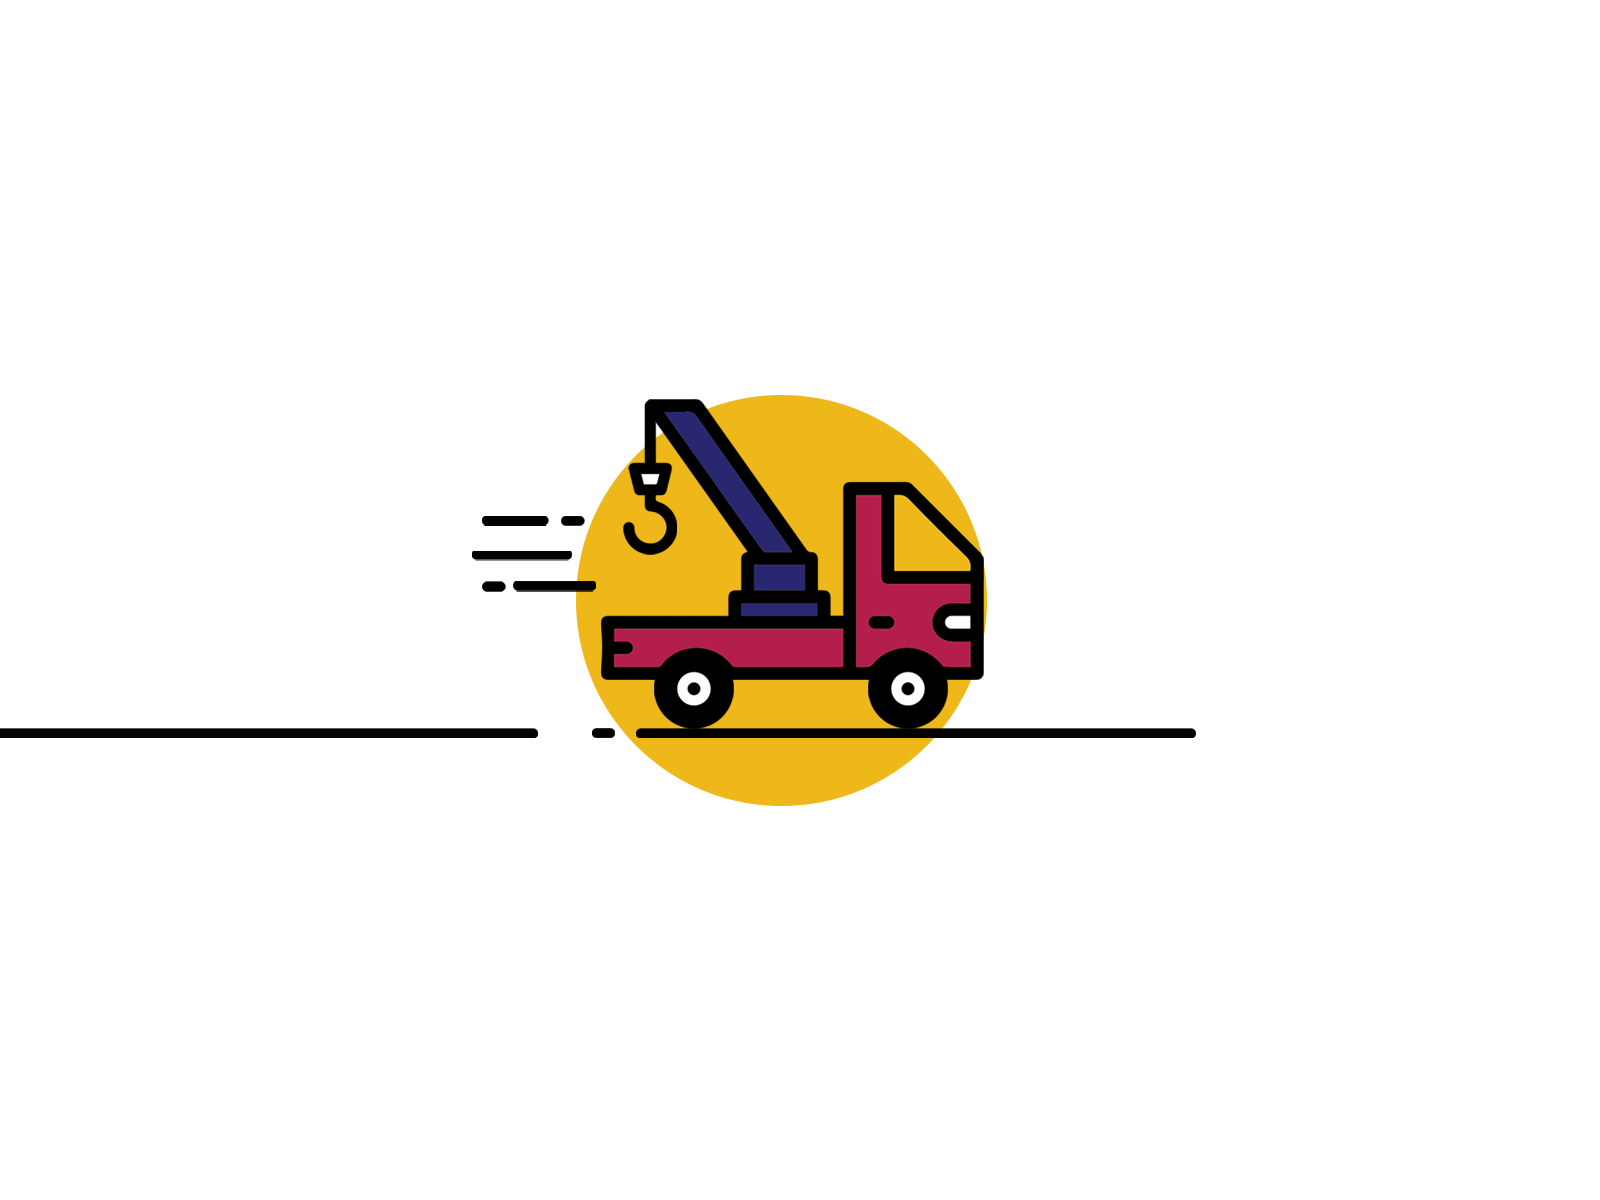 Speeding Tow Truck design illustration